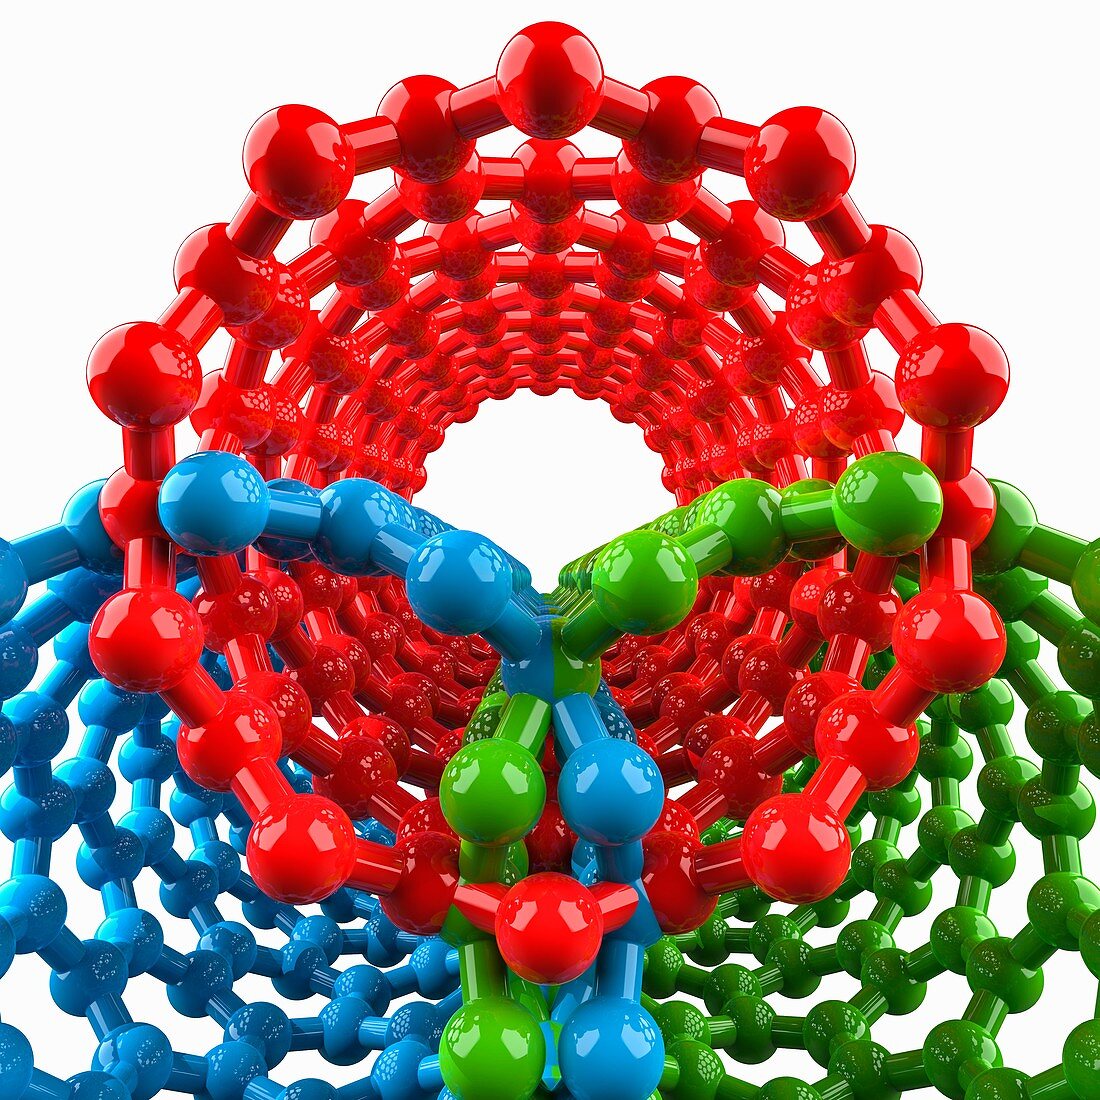 Three intersecting nanotubes, illustration